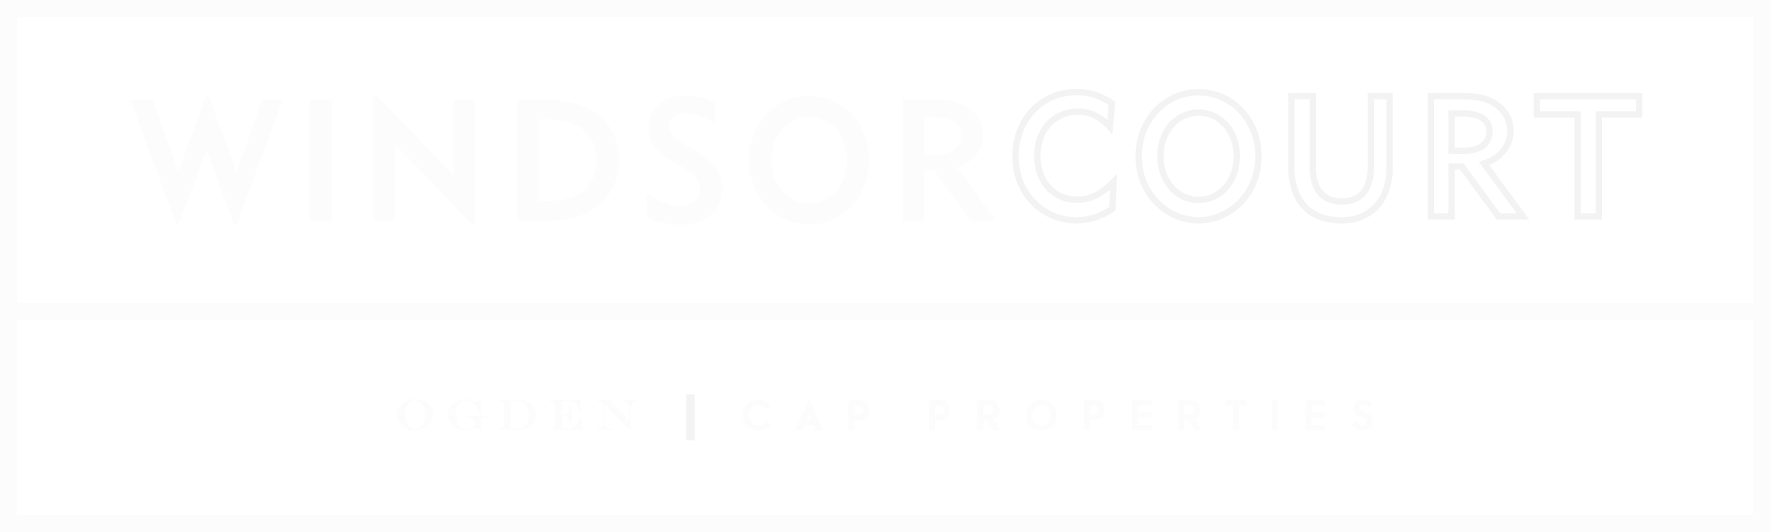 Windsor Court 151-155 Logo